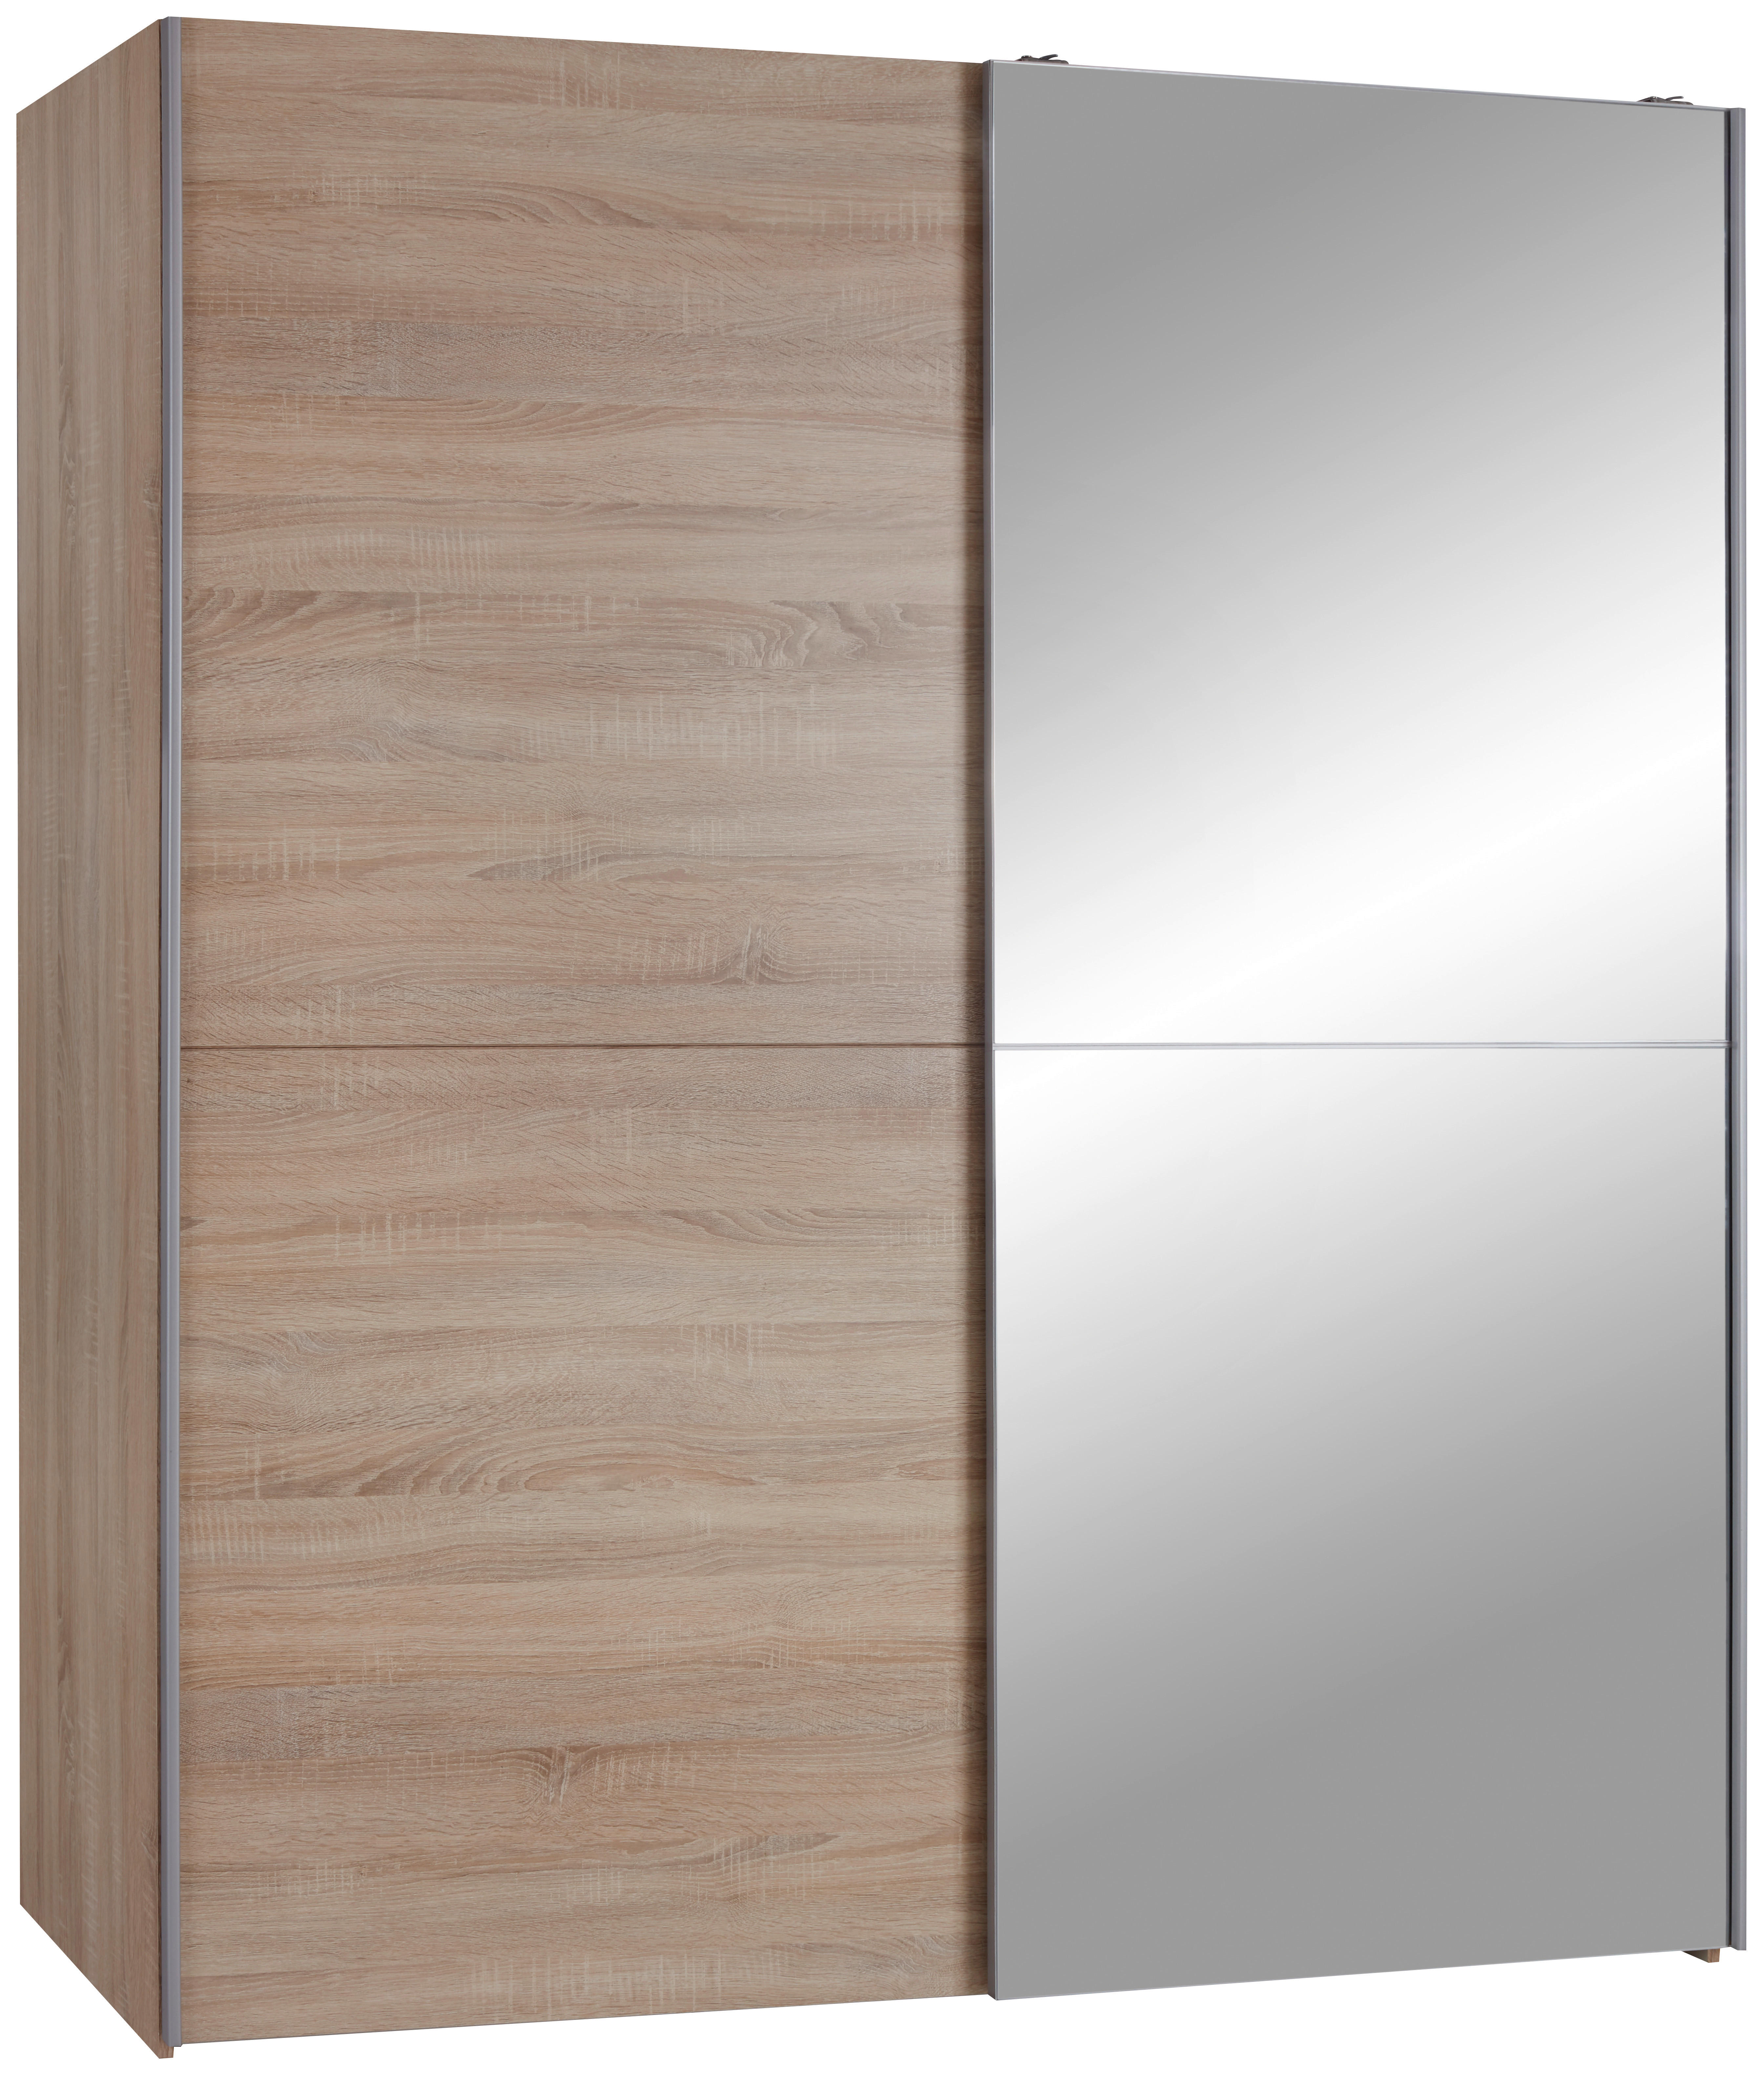 ORMAR S KLIZNIM VRATIMA     - boje hrasta/boje aluminija, Design, staklo/drvni materijal (170/195/59cm) - Modern Living